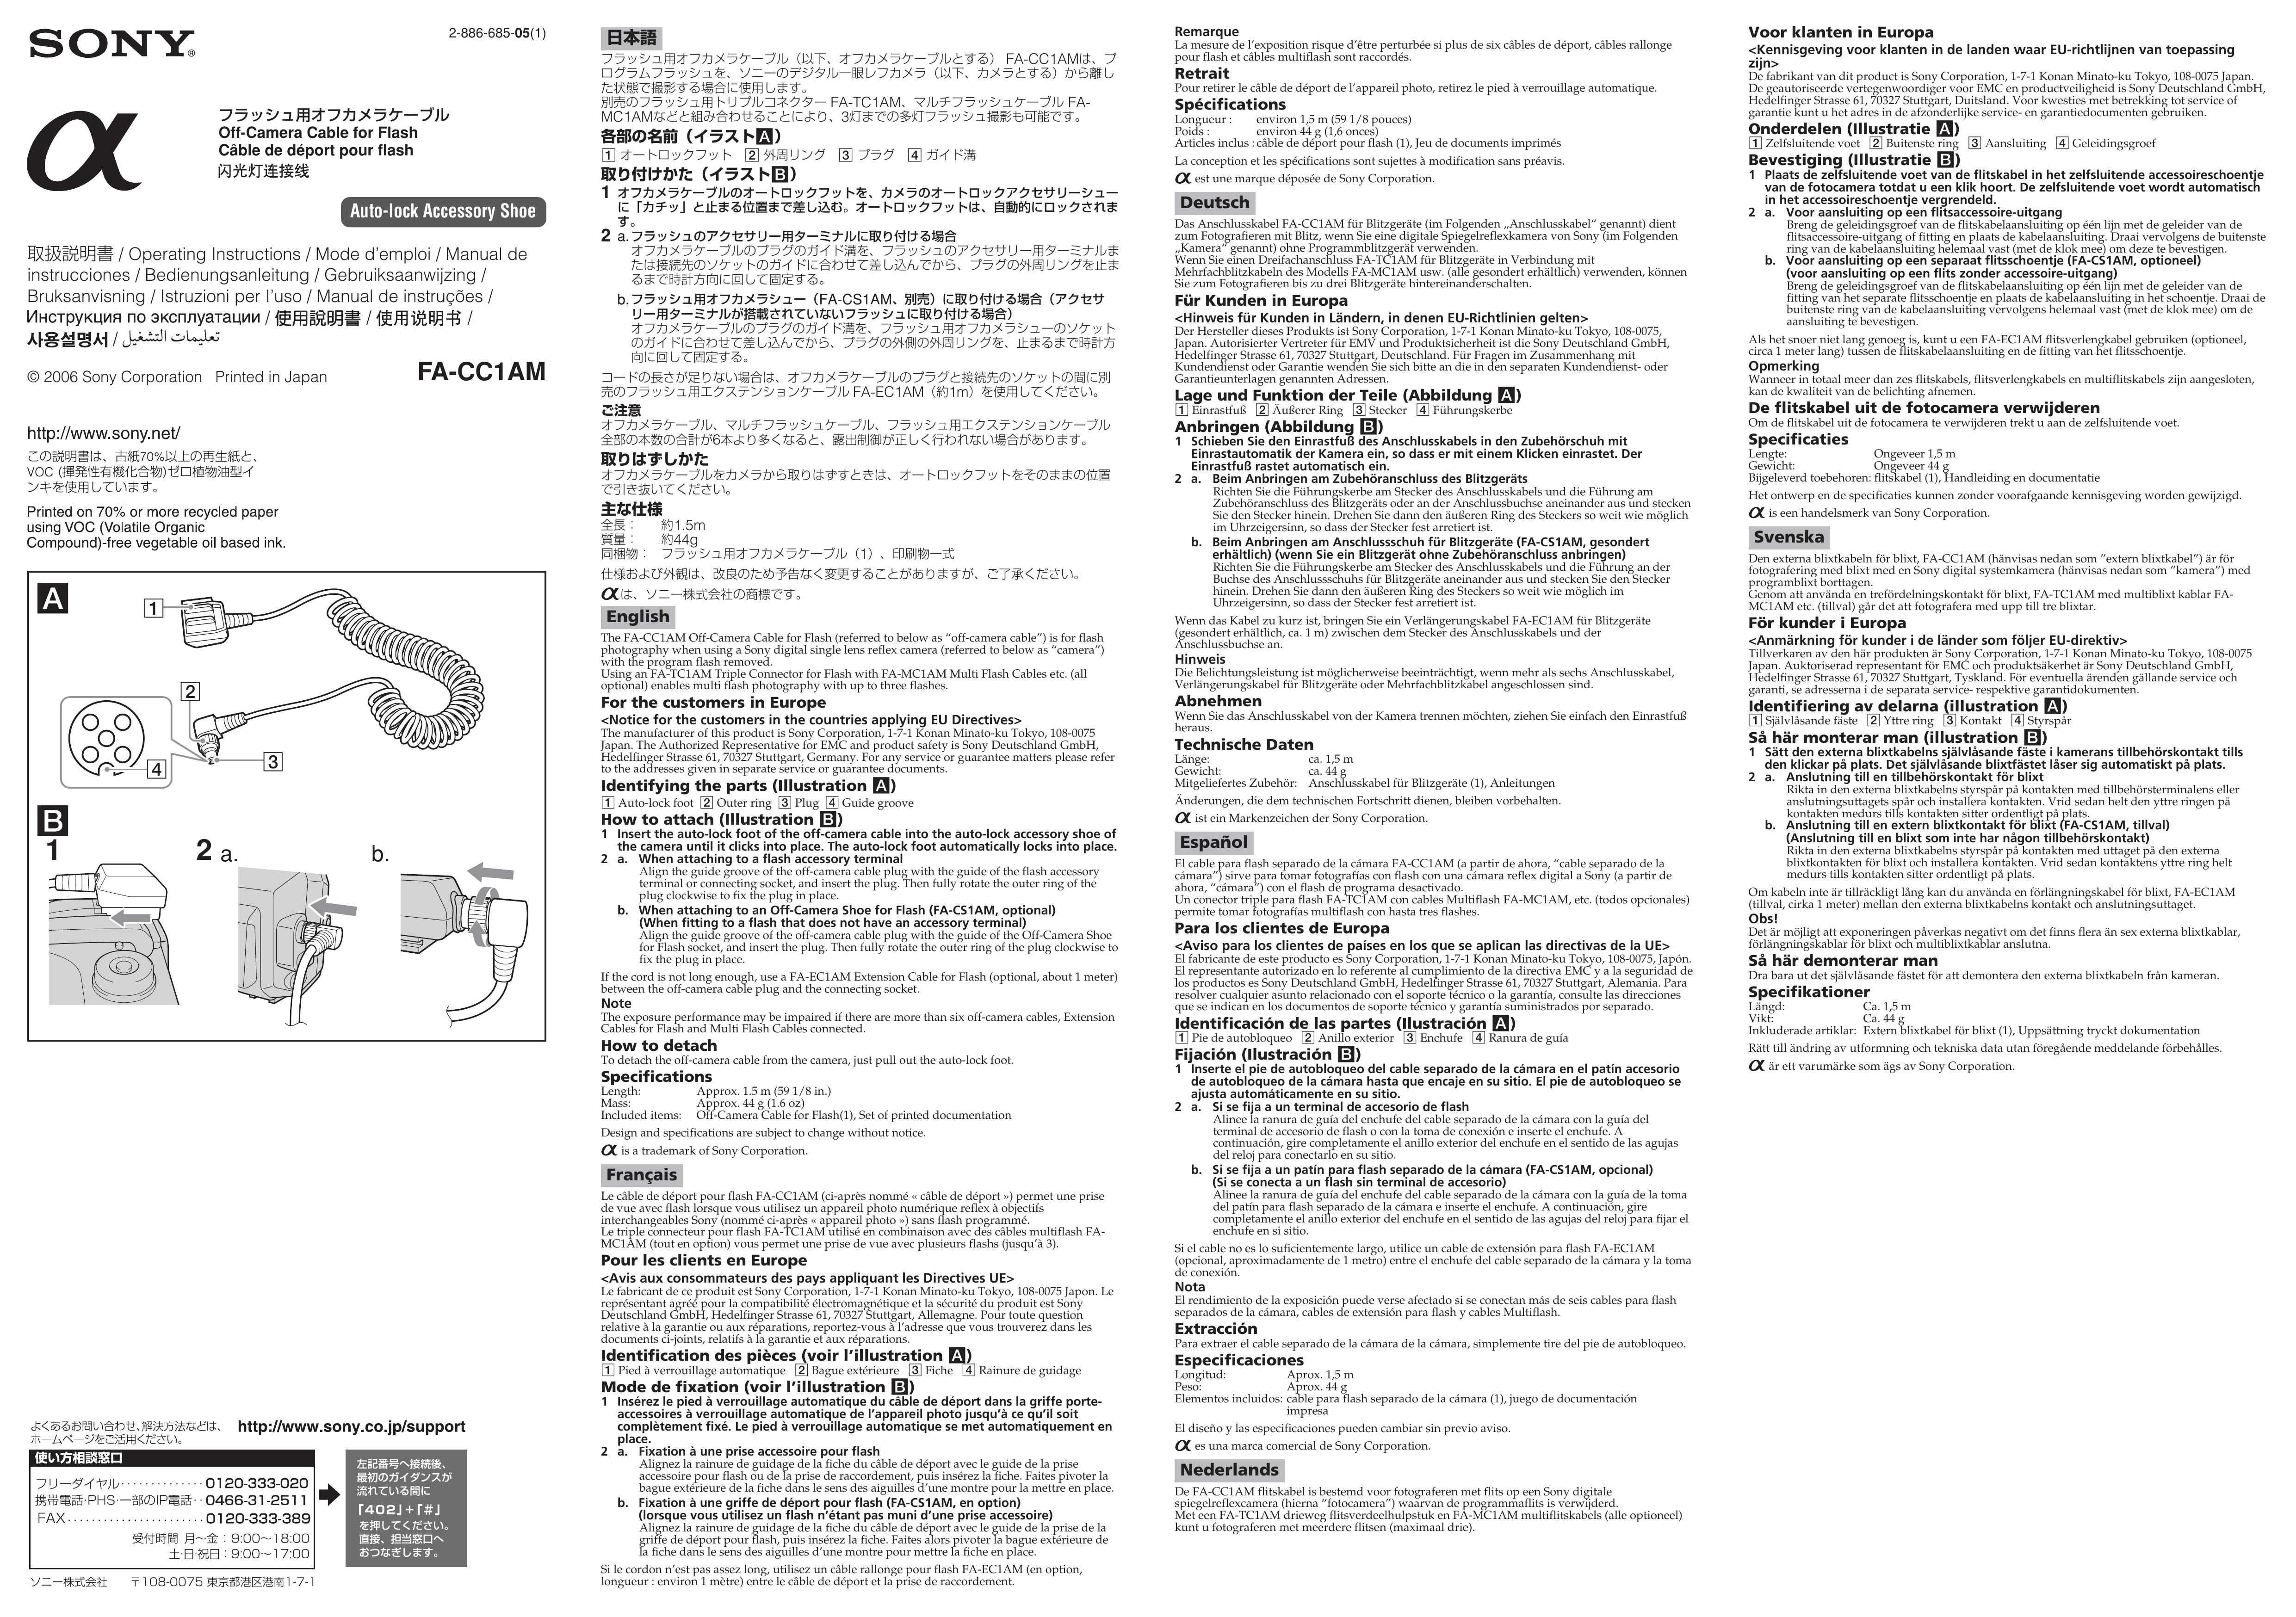 Sony FACC1AM Camera Lens User Manual